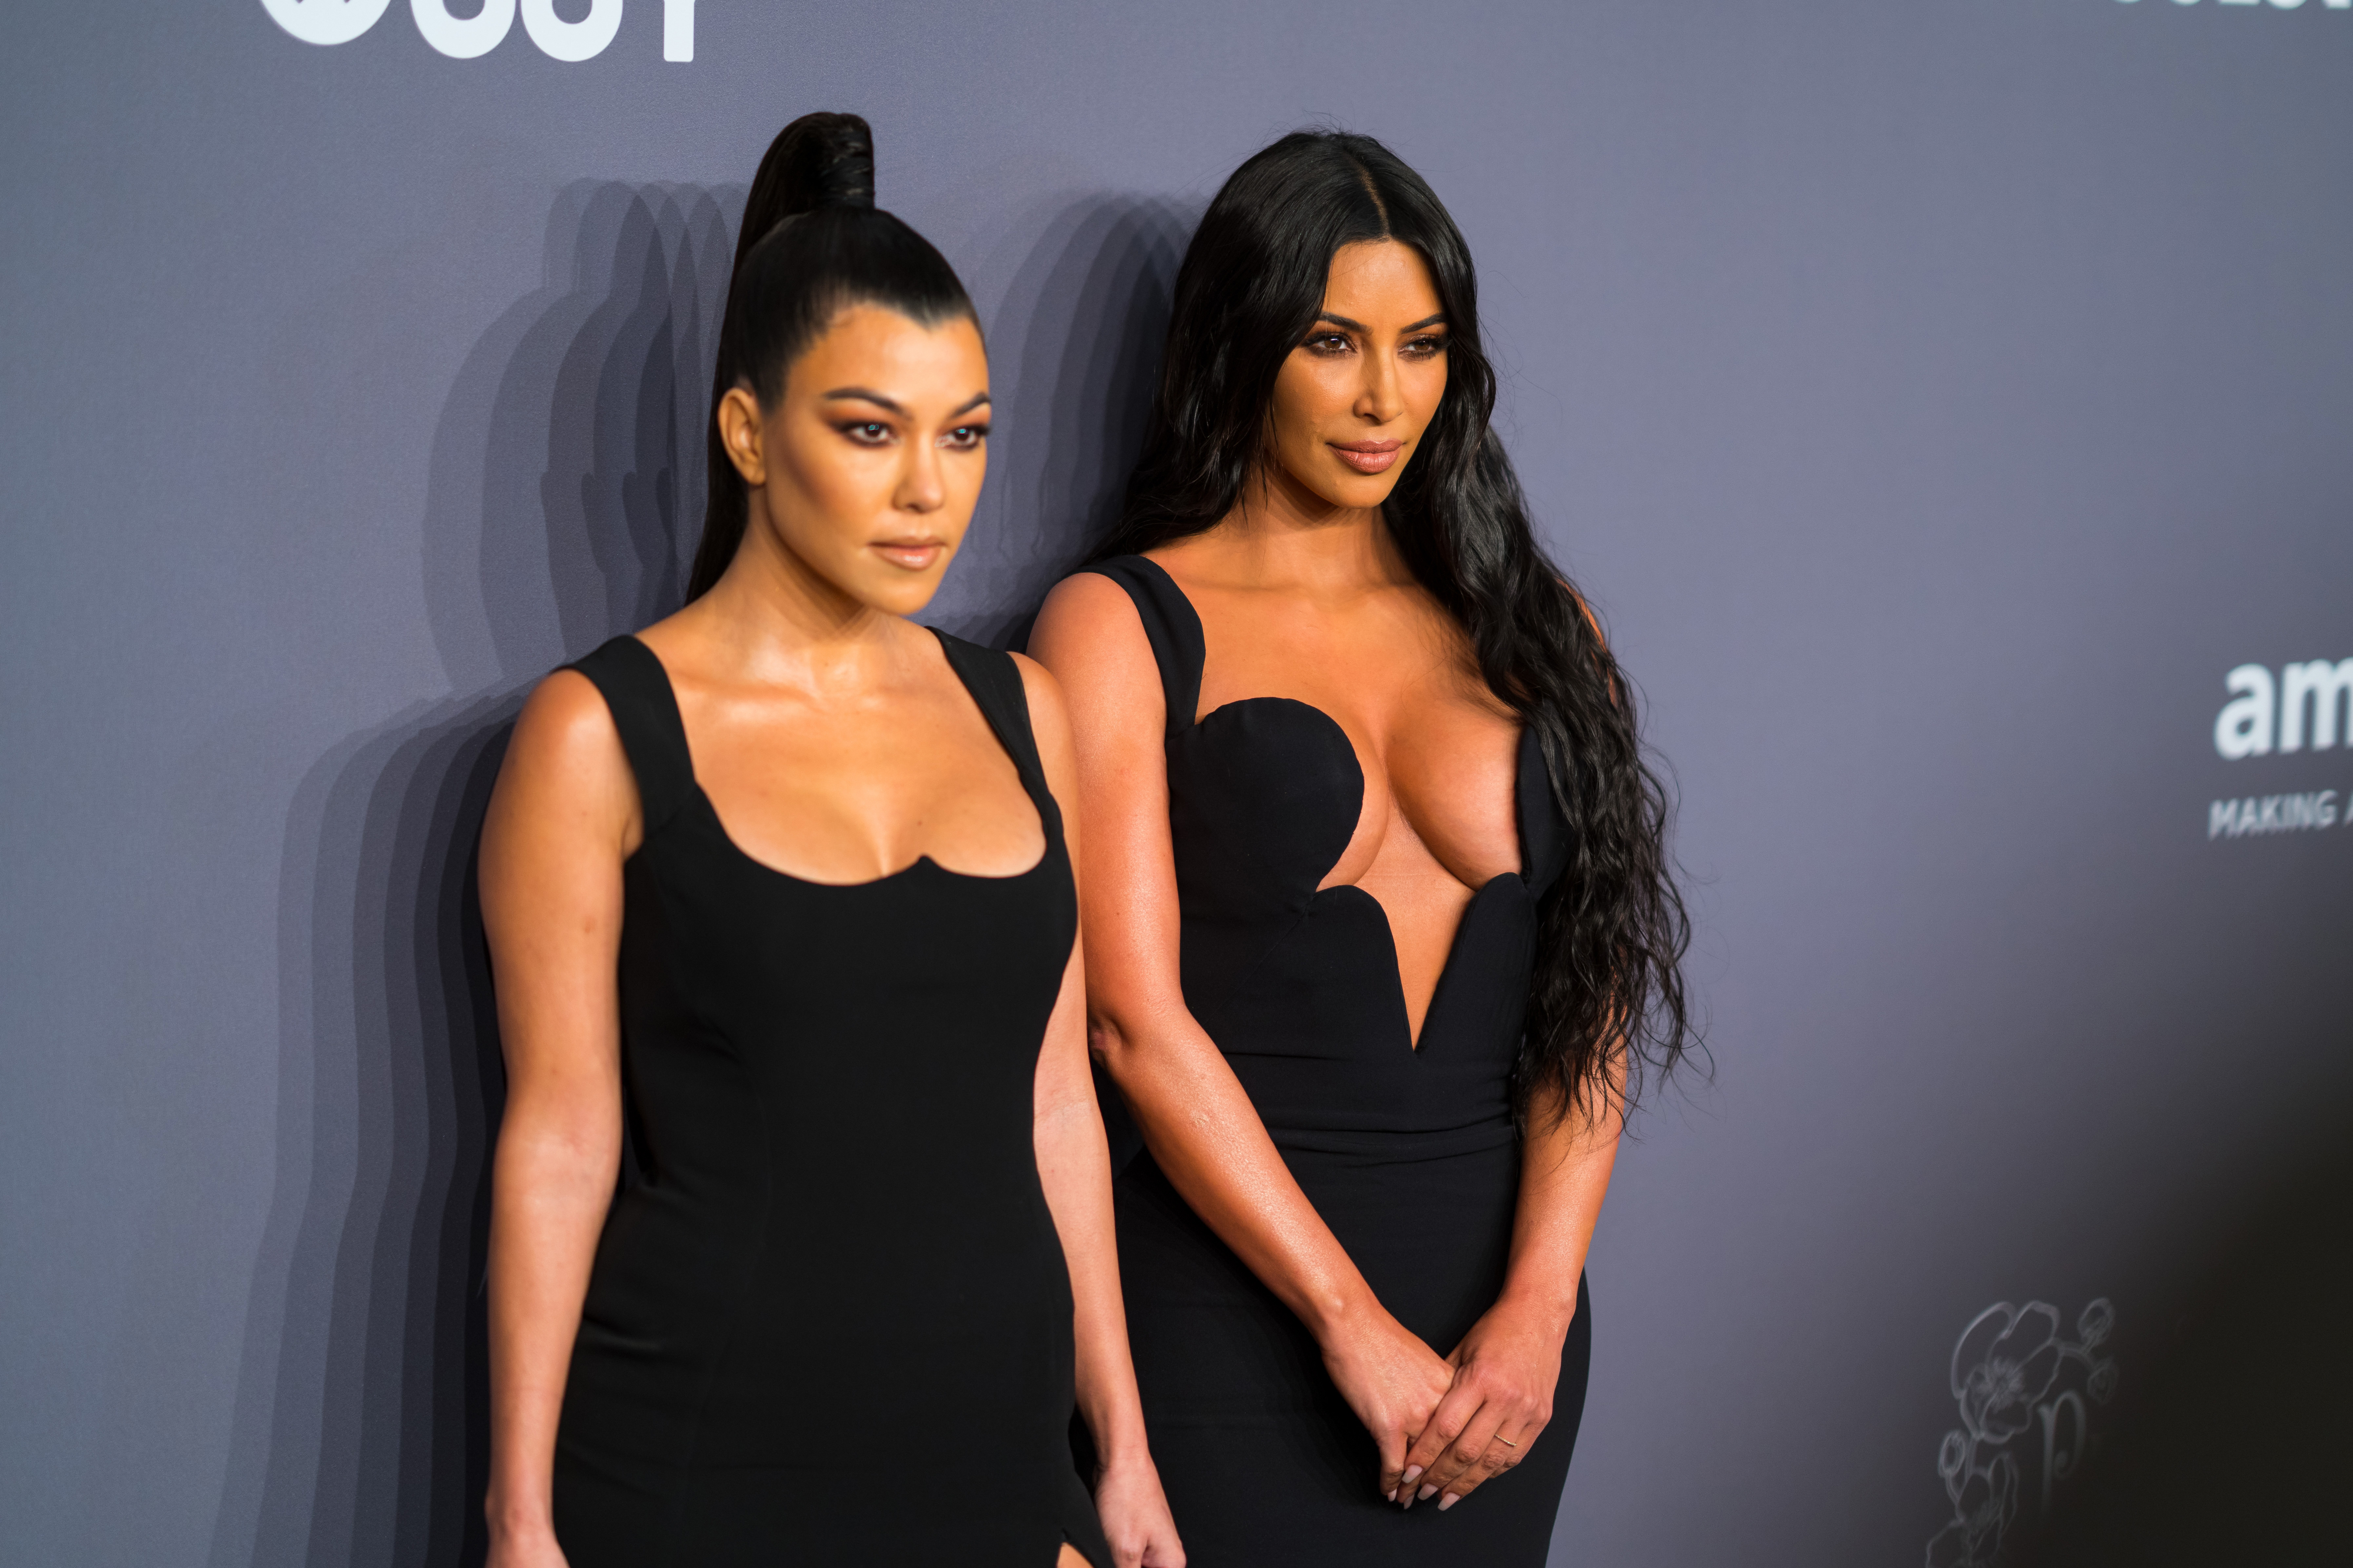 Close-up of Kourtney and Kim Kardashian at a media event